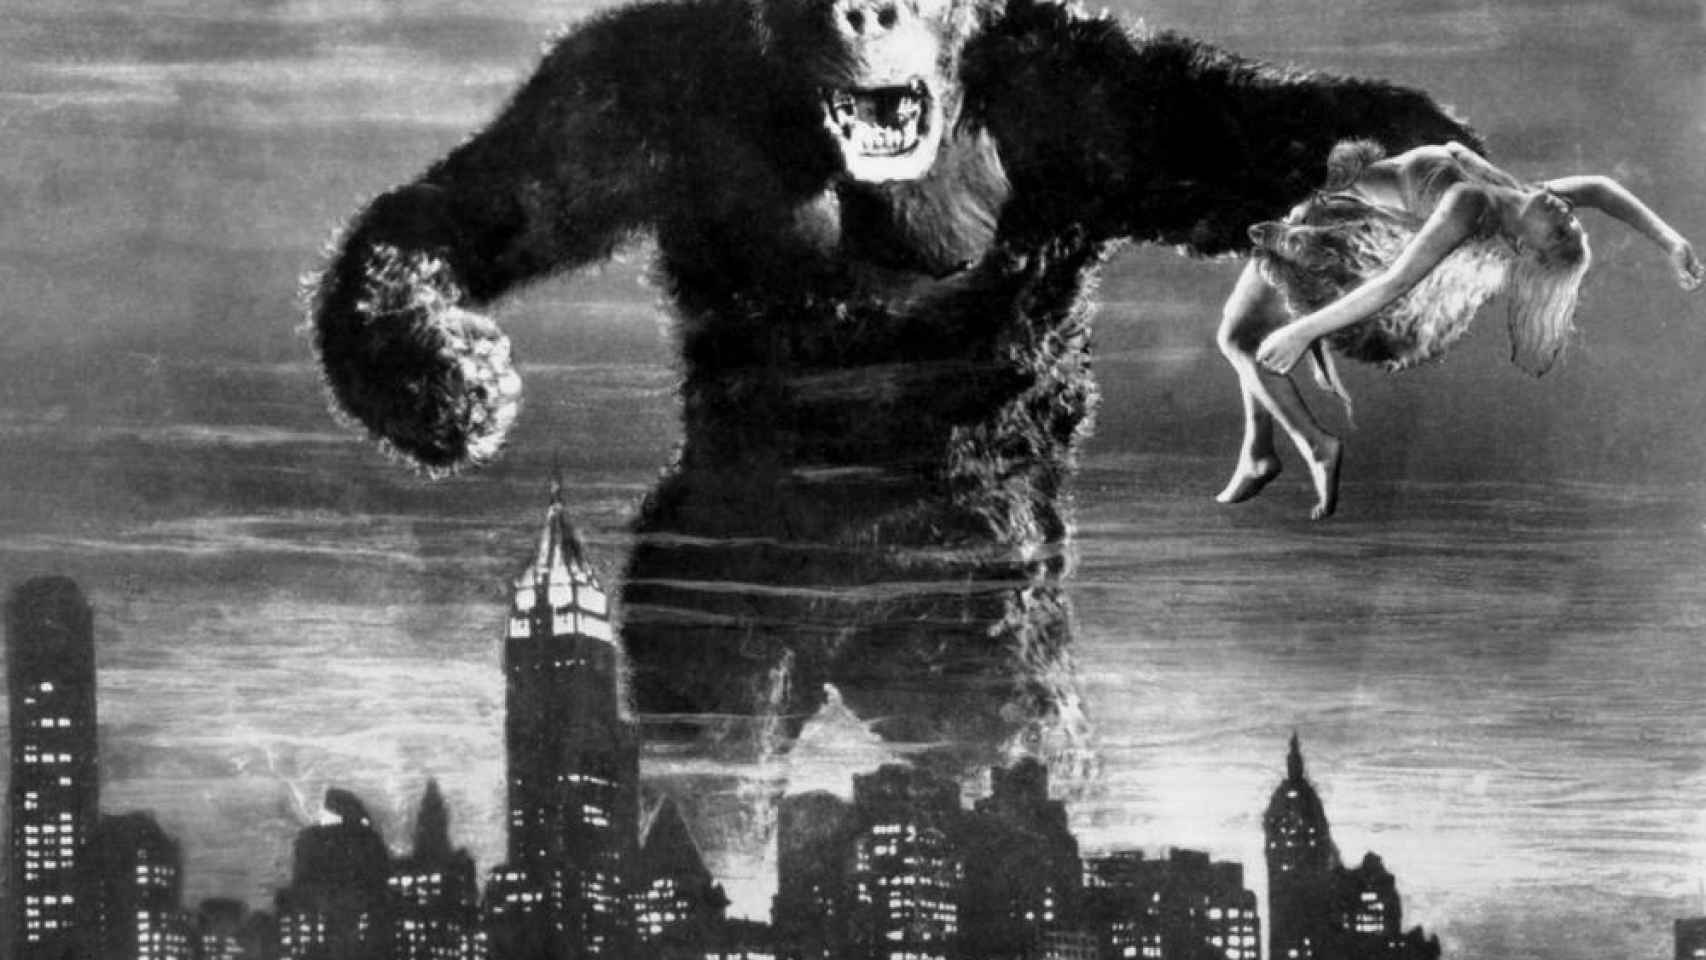 La película 'King Kong' refleja la xenofobia de la América blanca tras la crisis del 29, según Roche.